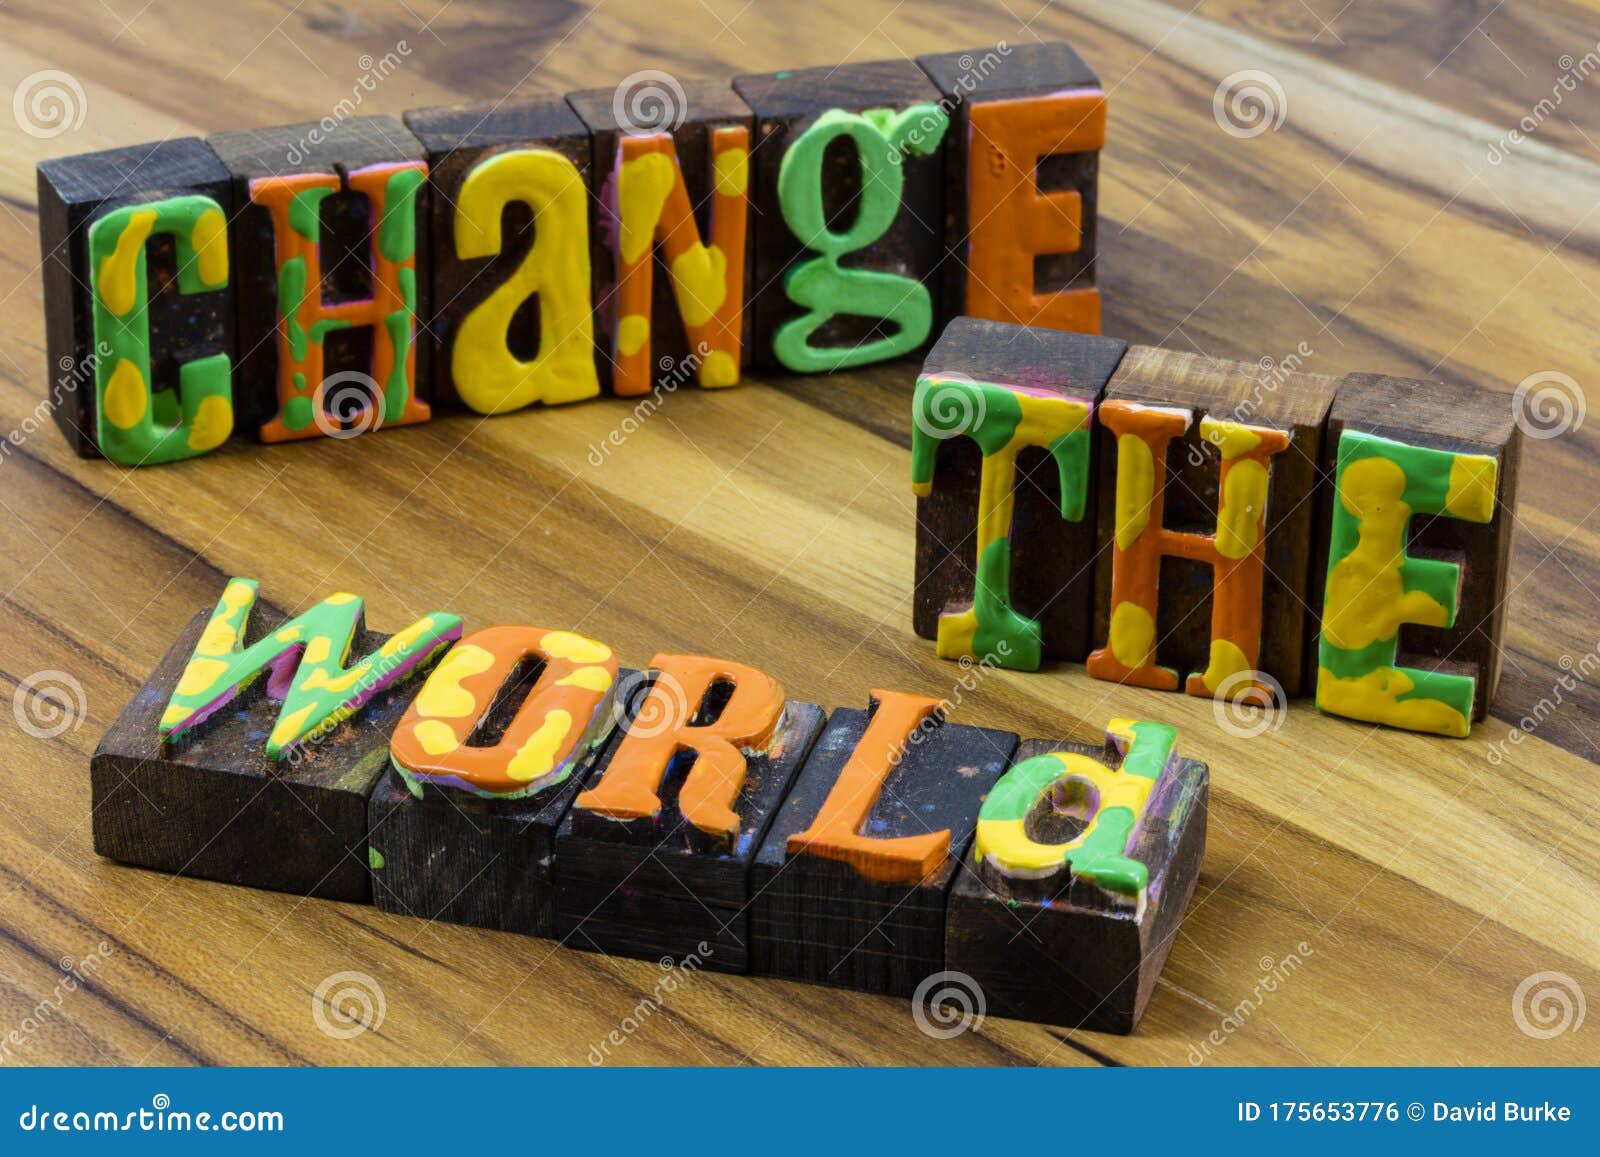 change world work hard strive for success